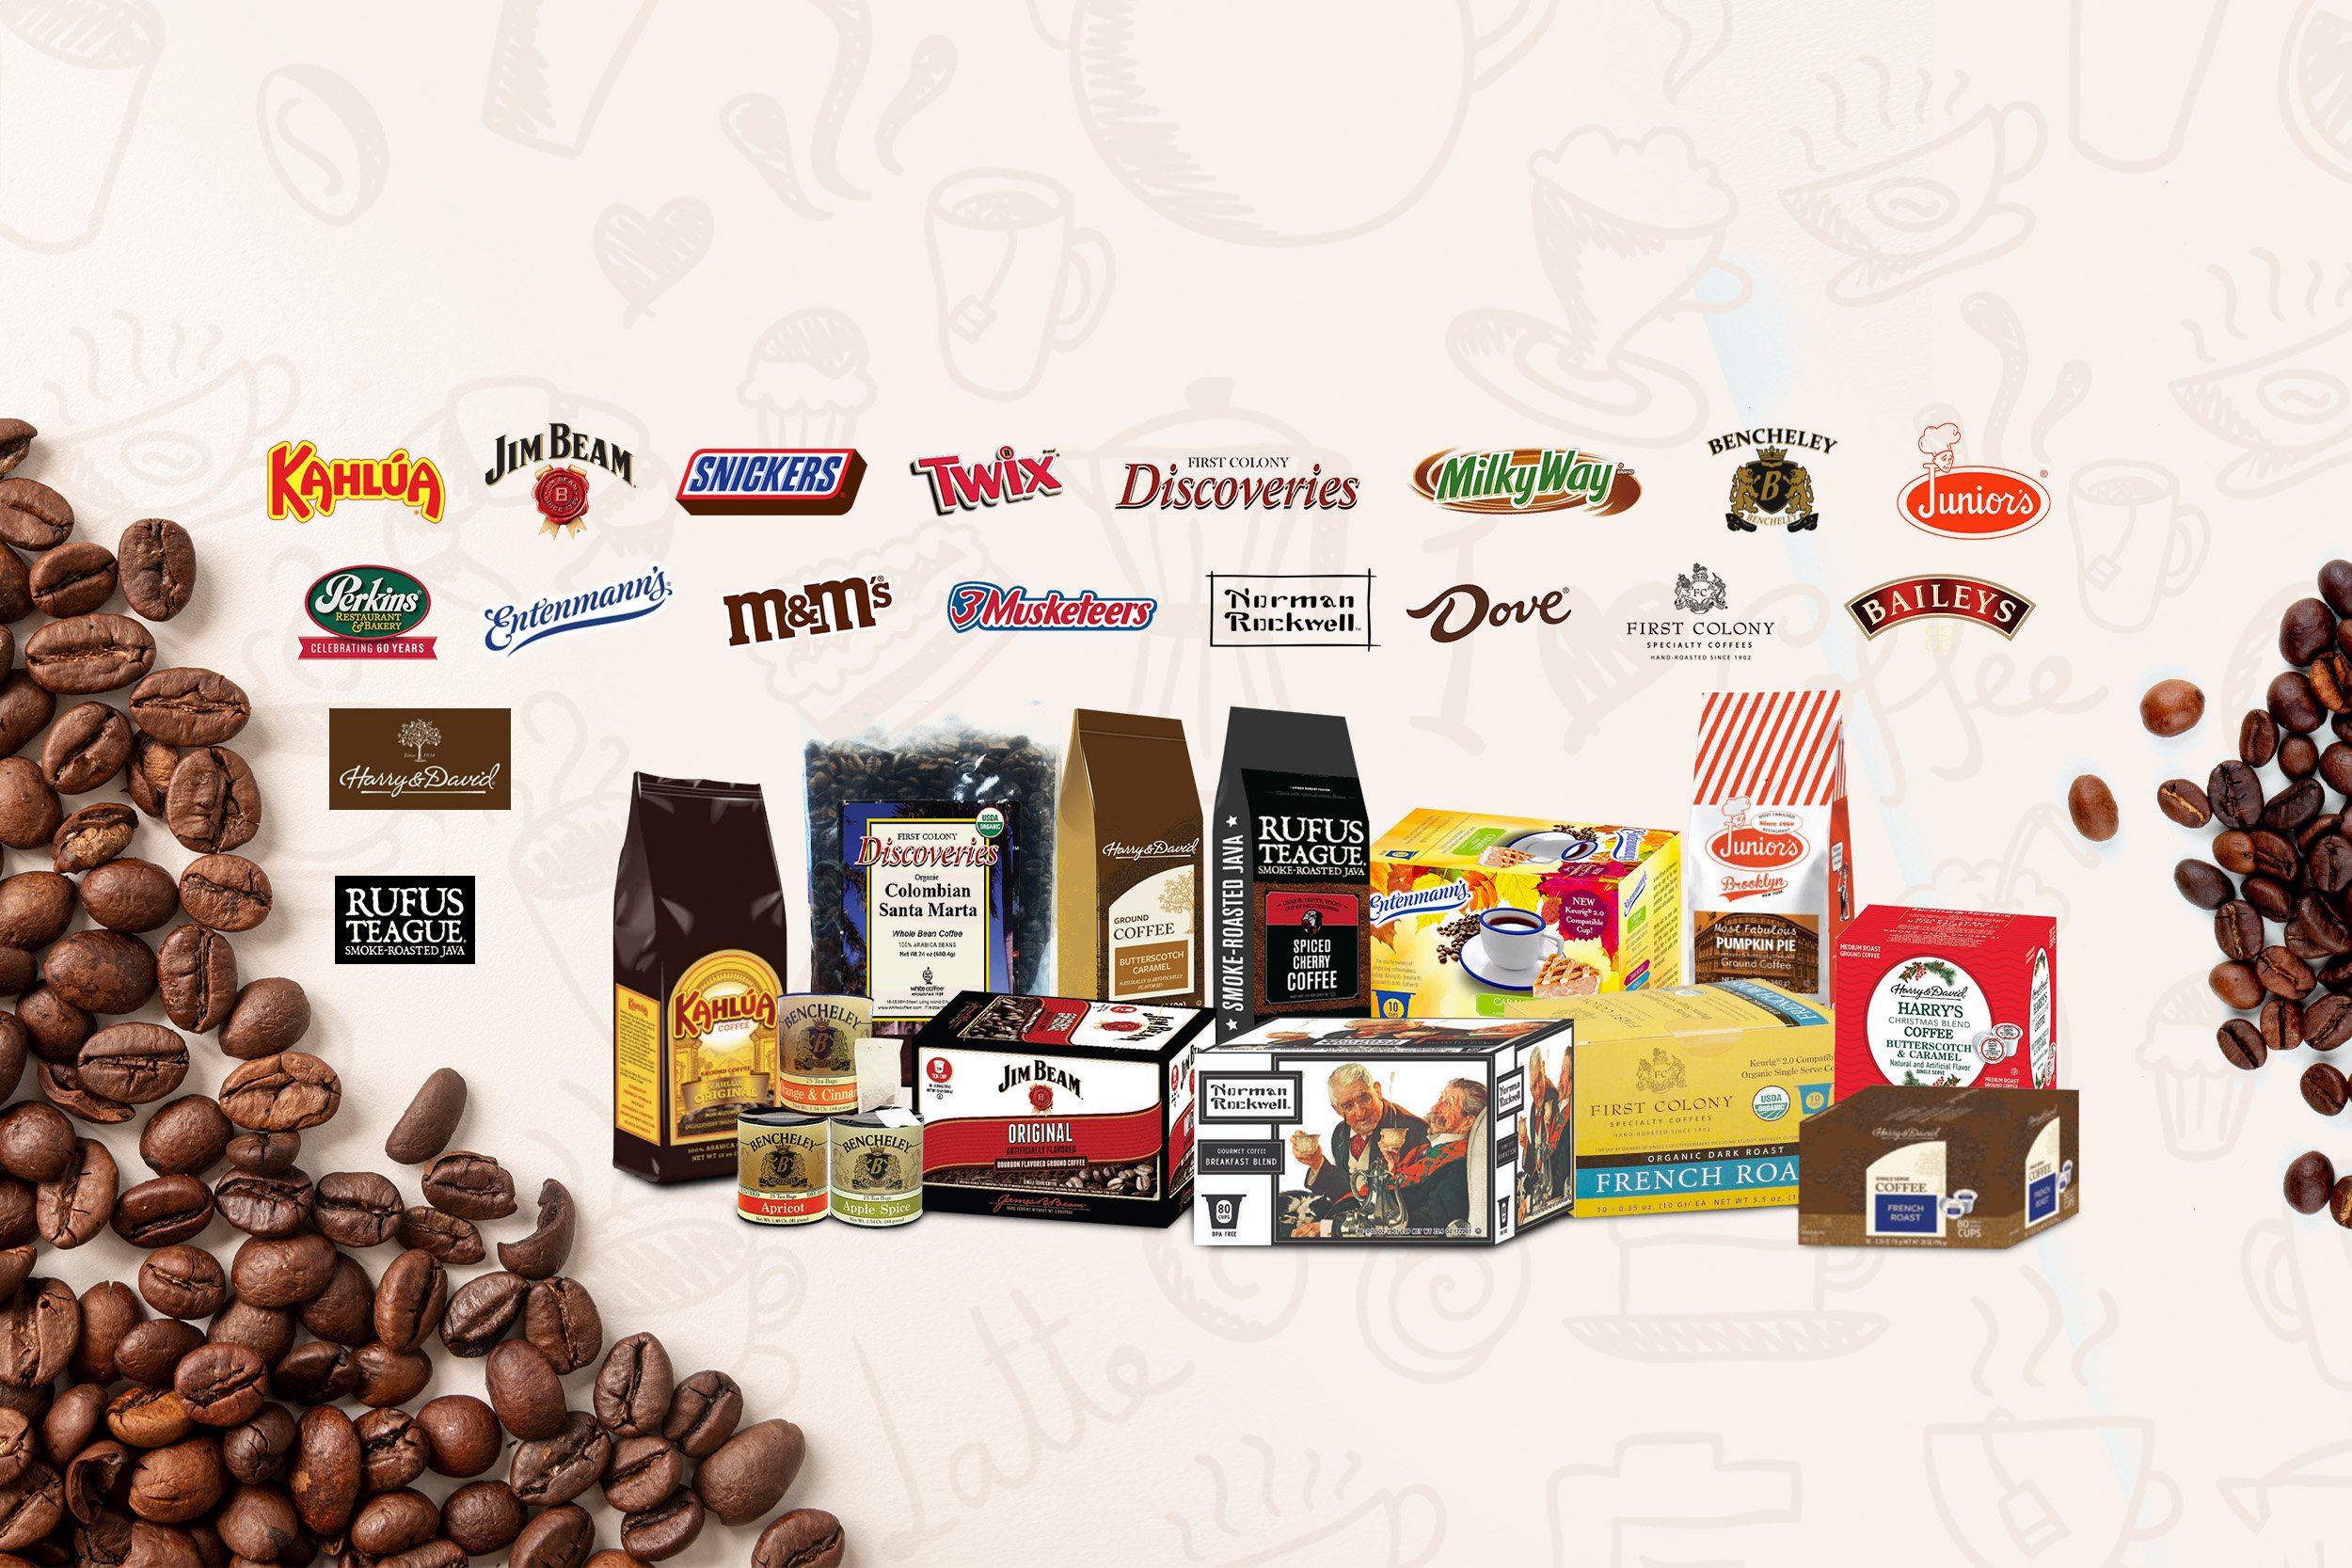 Coffee Licensing Companies